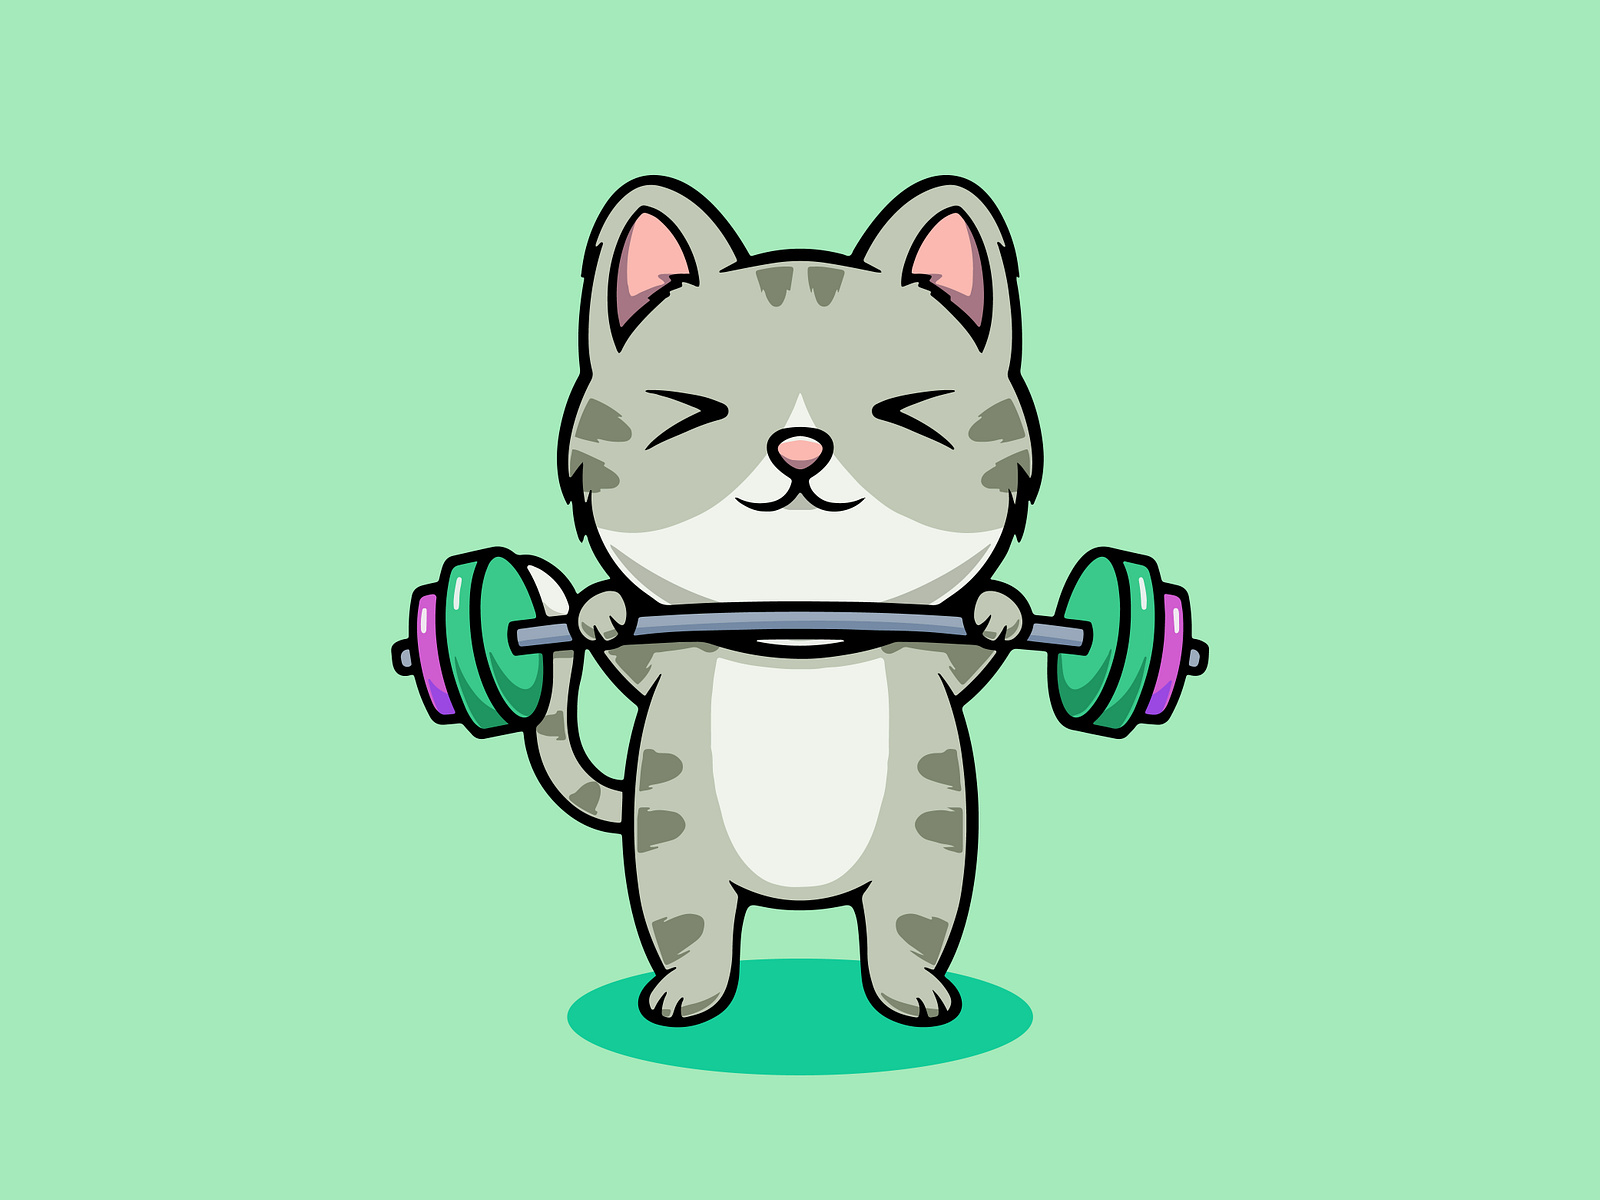 Cute Cat Workout Cartoon Illustration By Cubbone On Dribbble